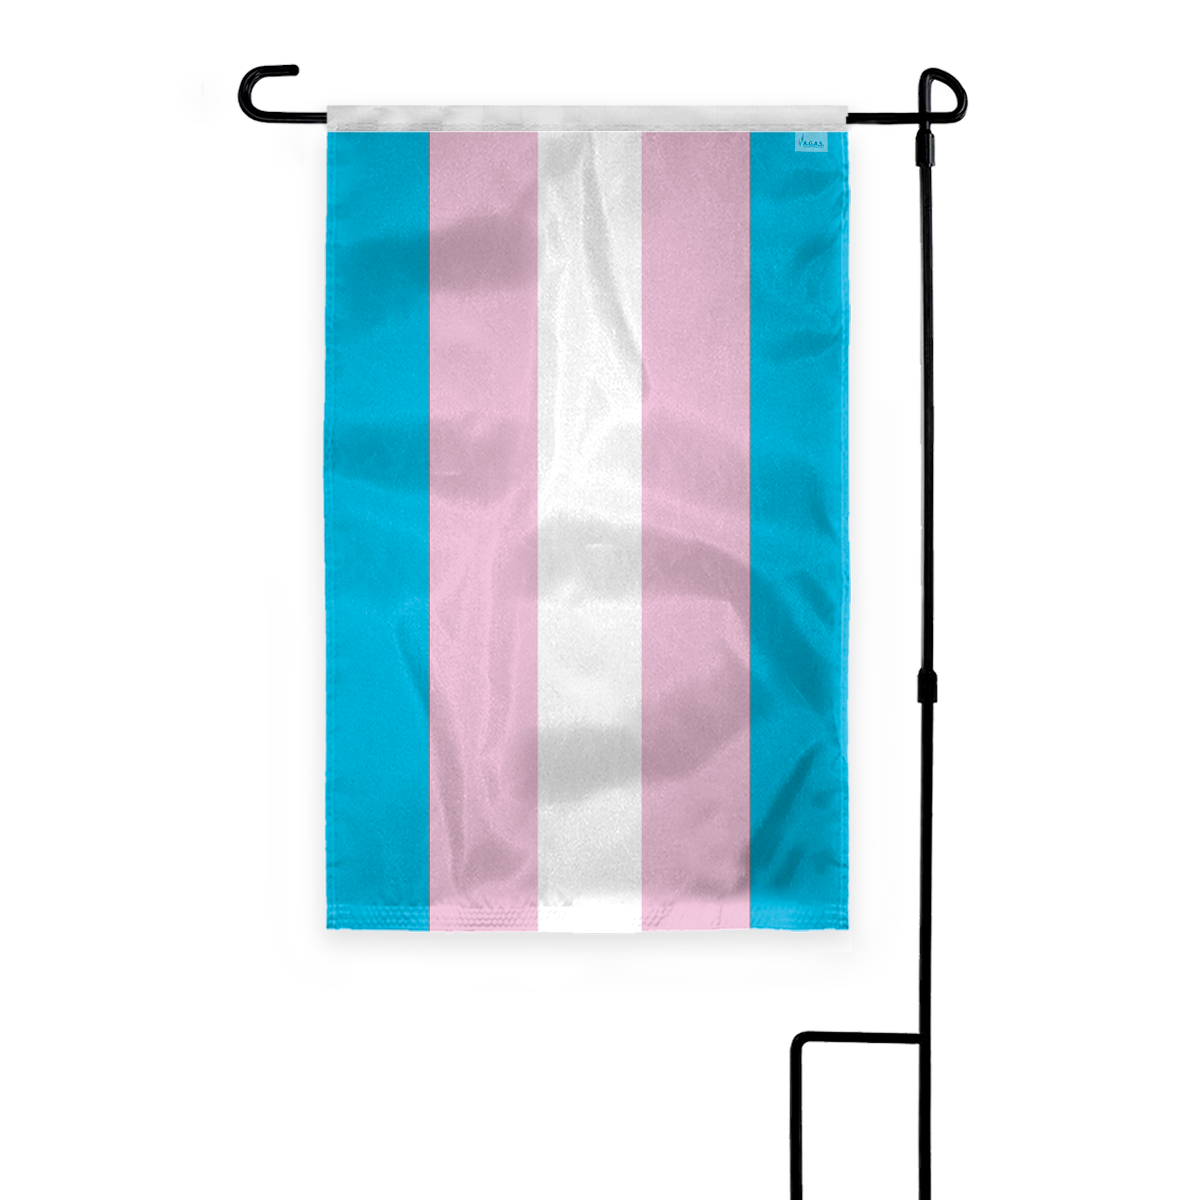 AGAS Transgender Garden Flag 12x18 inch - Printed on Outdoor 200D Nylon